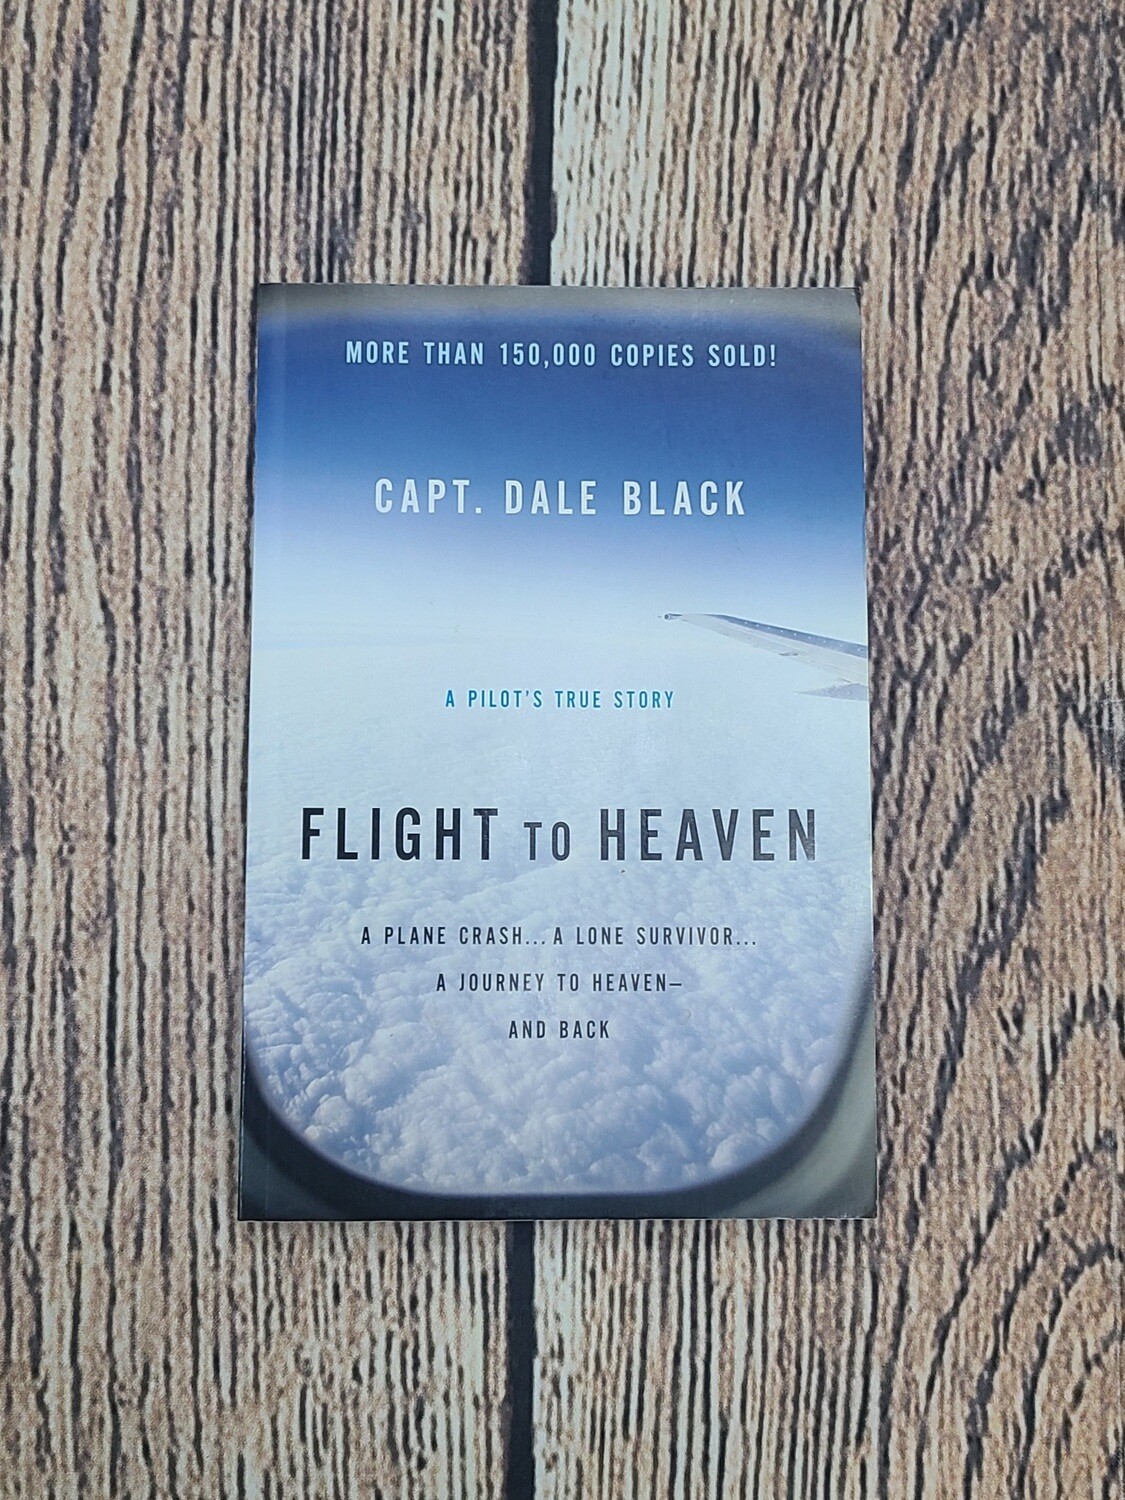 Flight to Heaven by Capt. Dale Black